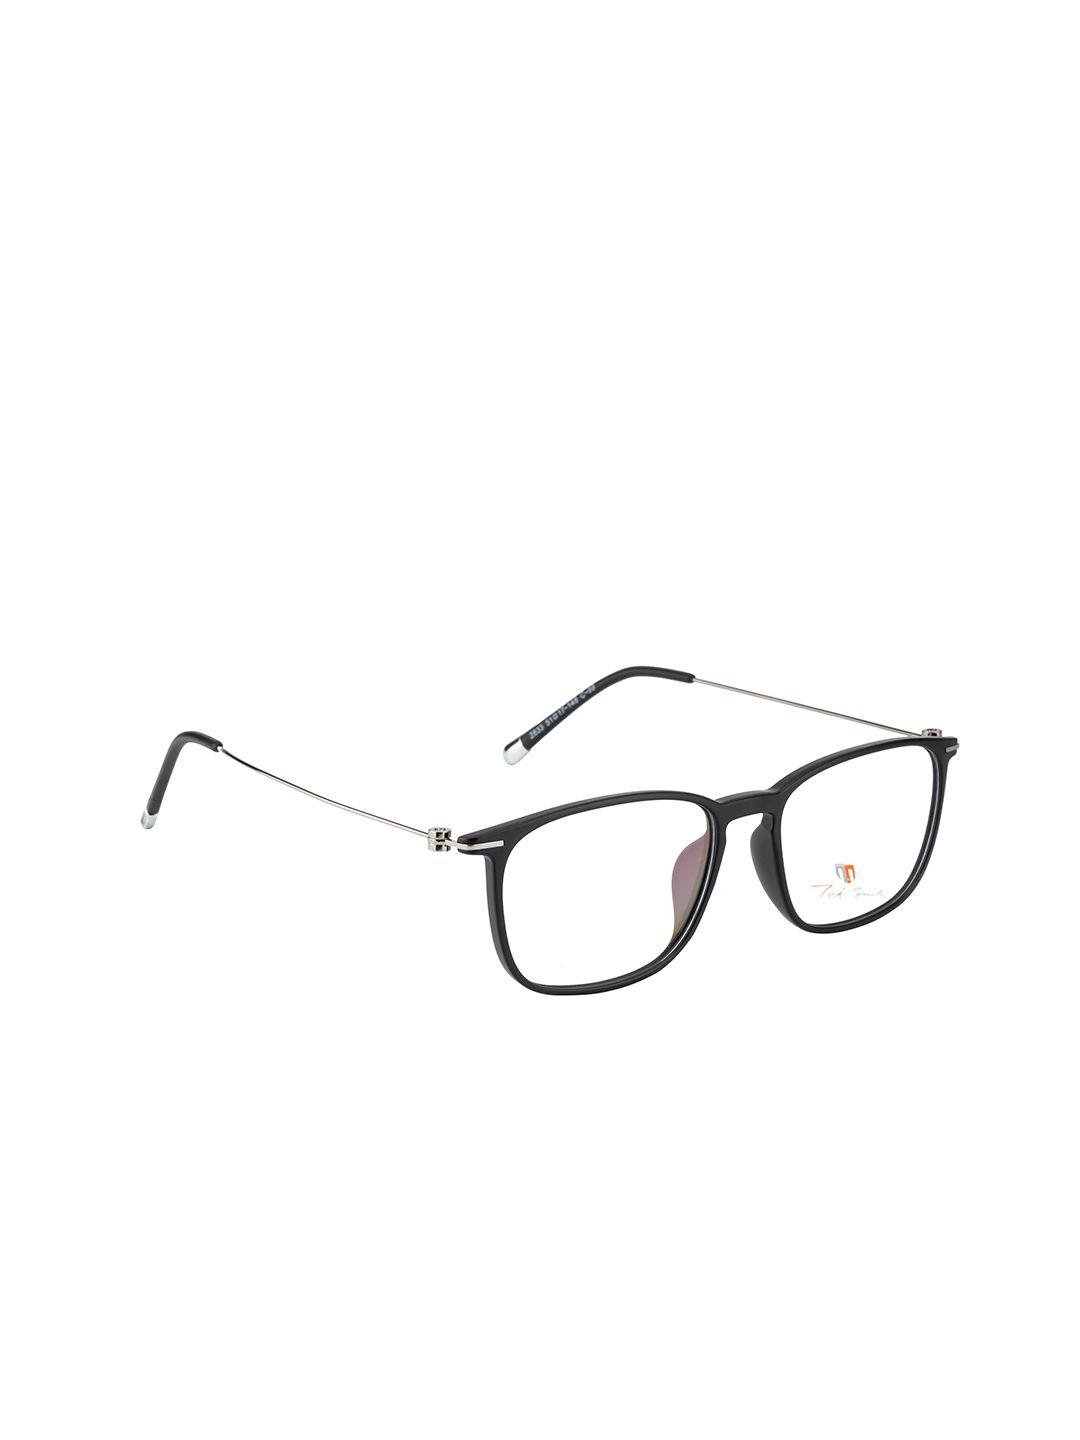 ted smith unisex black & silver-toned solid full rim square frames eyeglasses